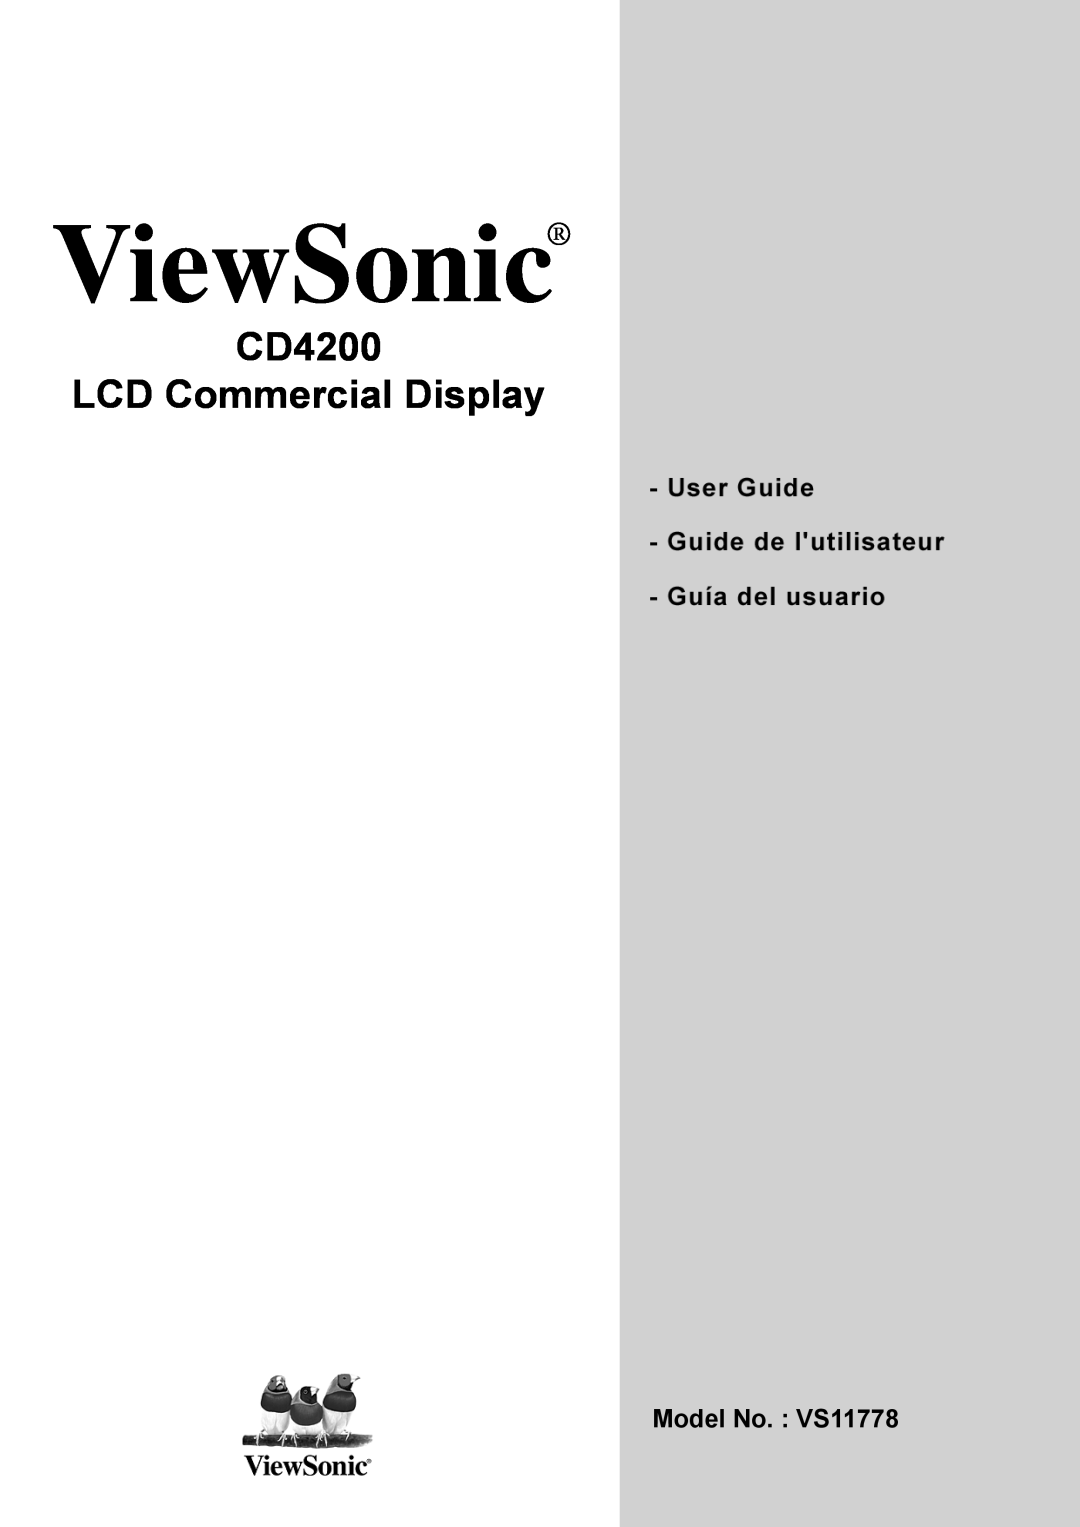 ViewSonic manual Model No. VS11778, ViewSonic, CD4200 LCD Commercial Display 